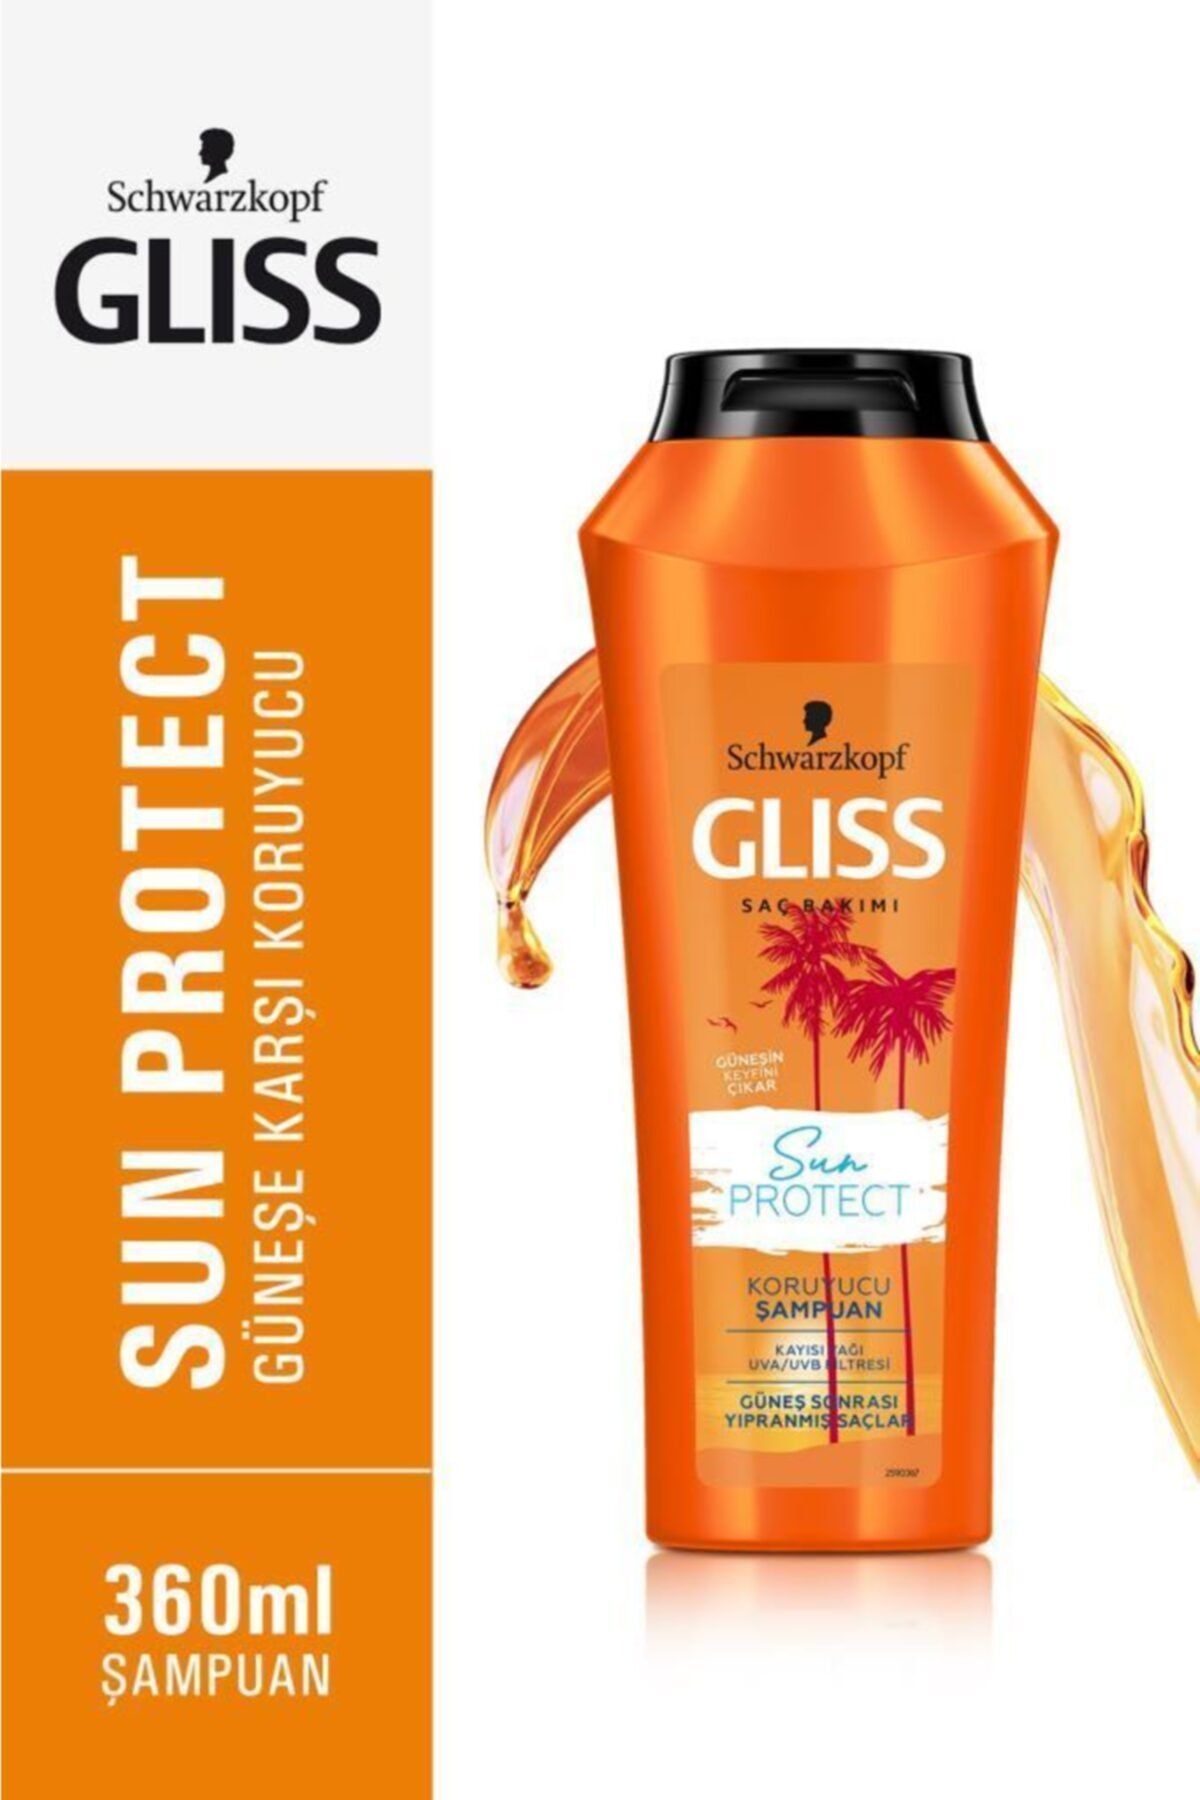 Gliss Schwarzkopf Gliss Sun Protect Güneşe Karşi Koruyucu Şampuan 360 Ml